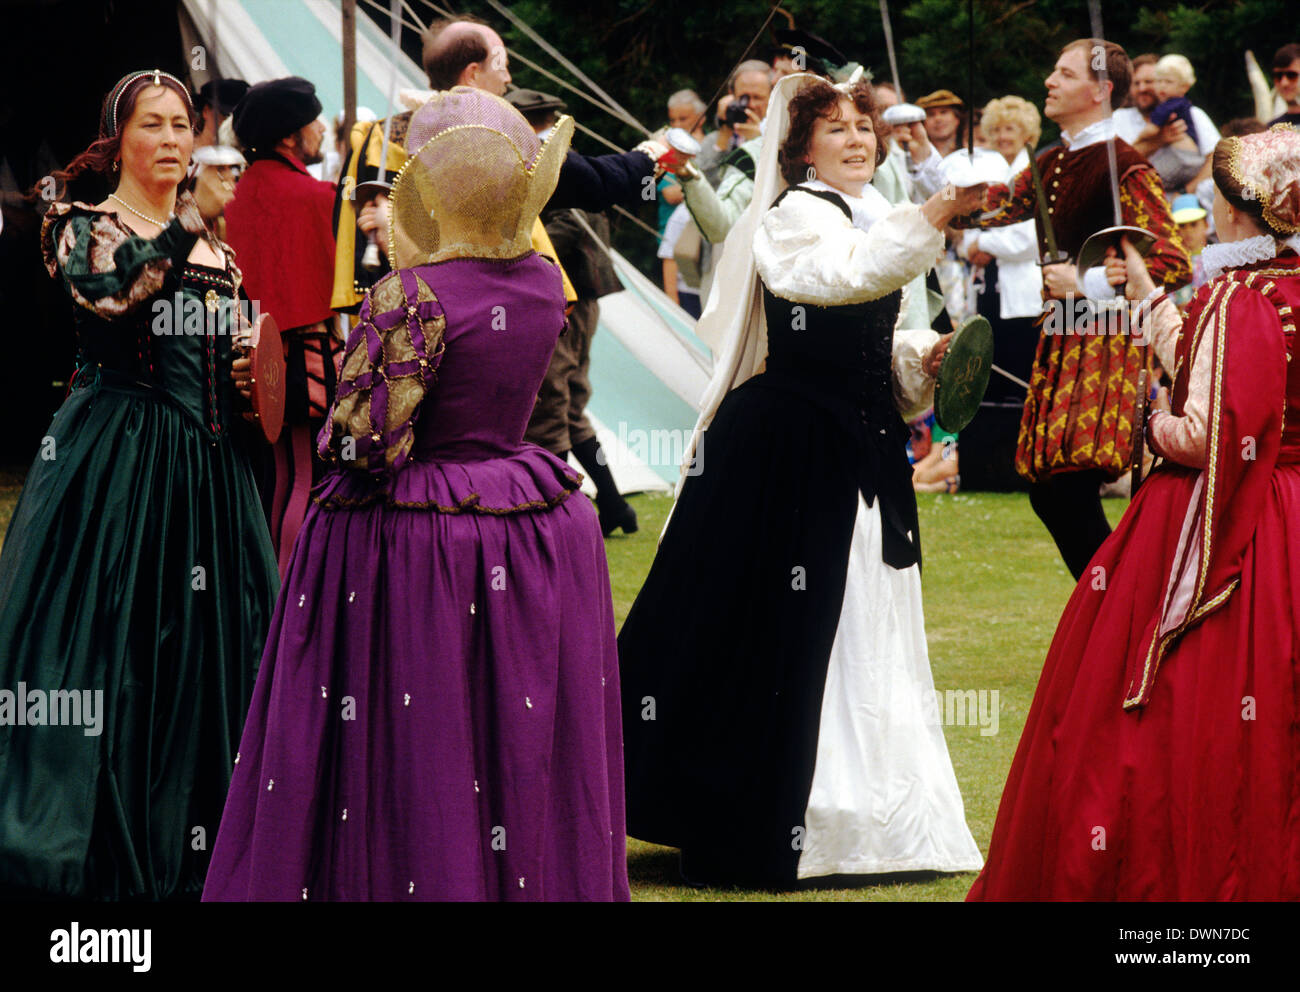 Tudor Period Dancing, late 16th century historical re-enactment, men women dancing Elizabethan dance costume costumes fashion fashions Stock Photo